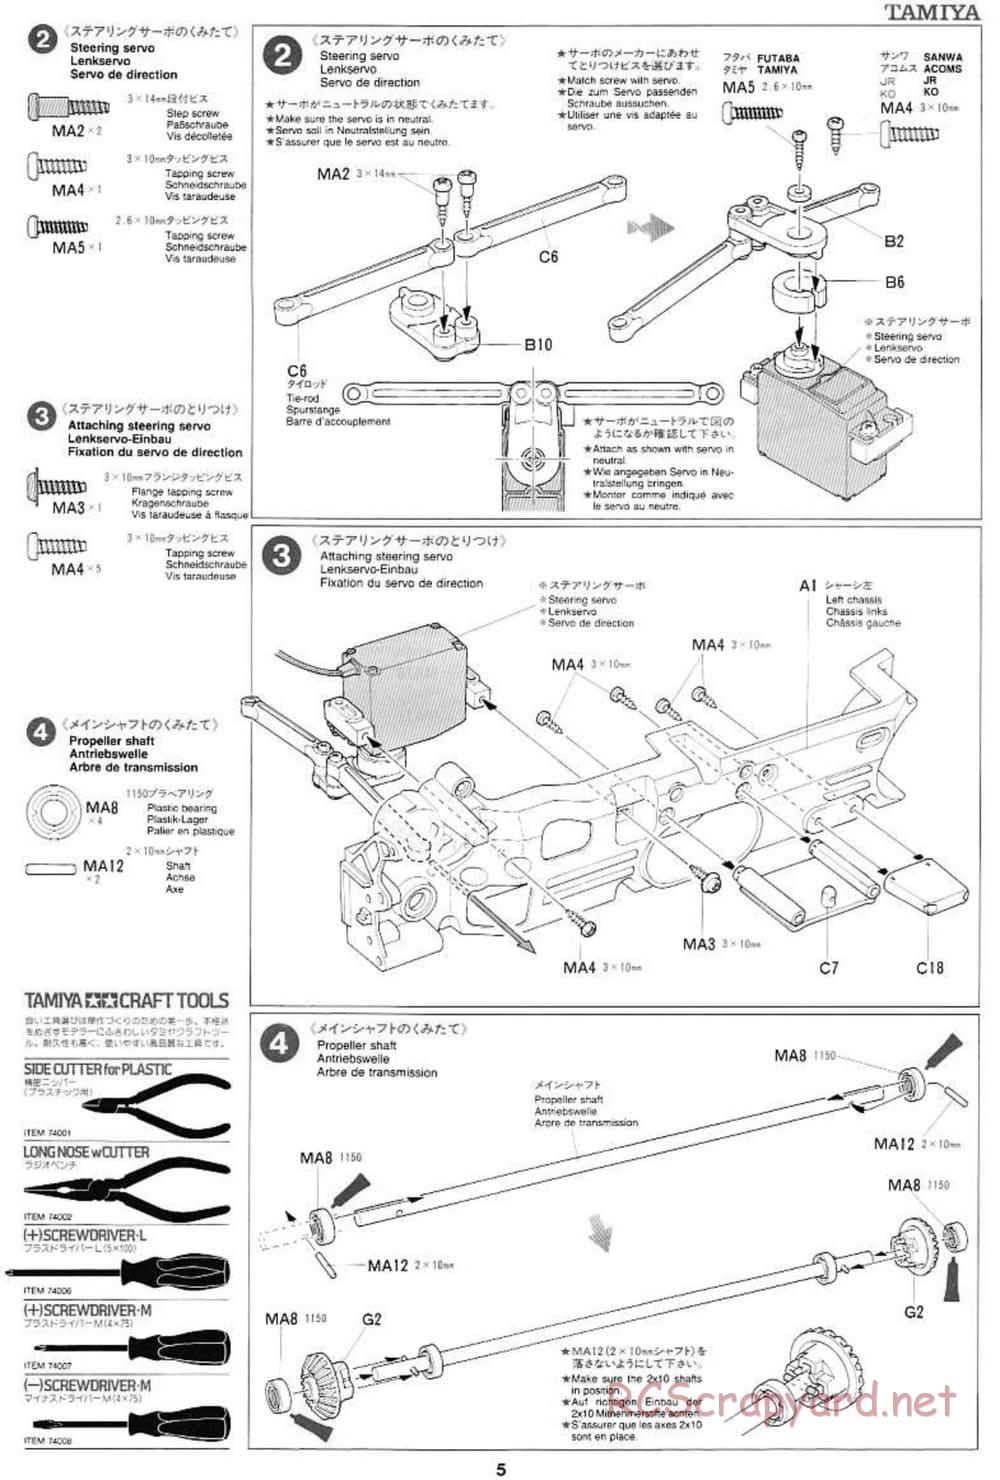 Tamiya - Ford Escort WRC - TL-01 Chassis - Manual - Page 5